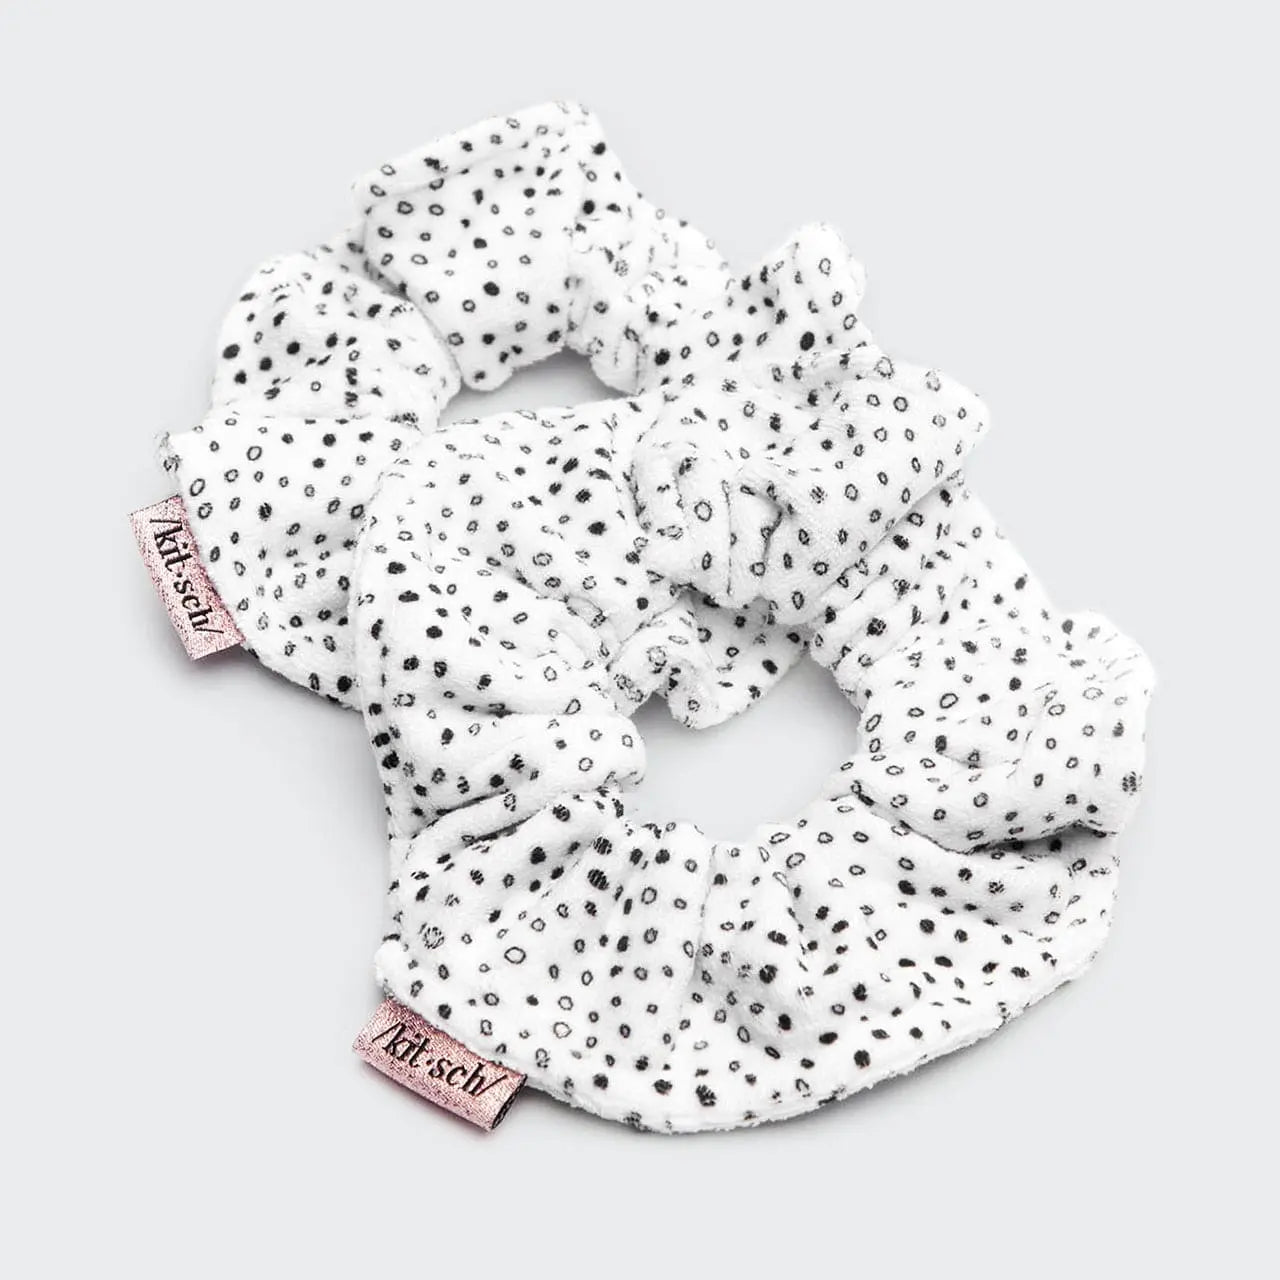 Towel Scrunchies - Micro Dot